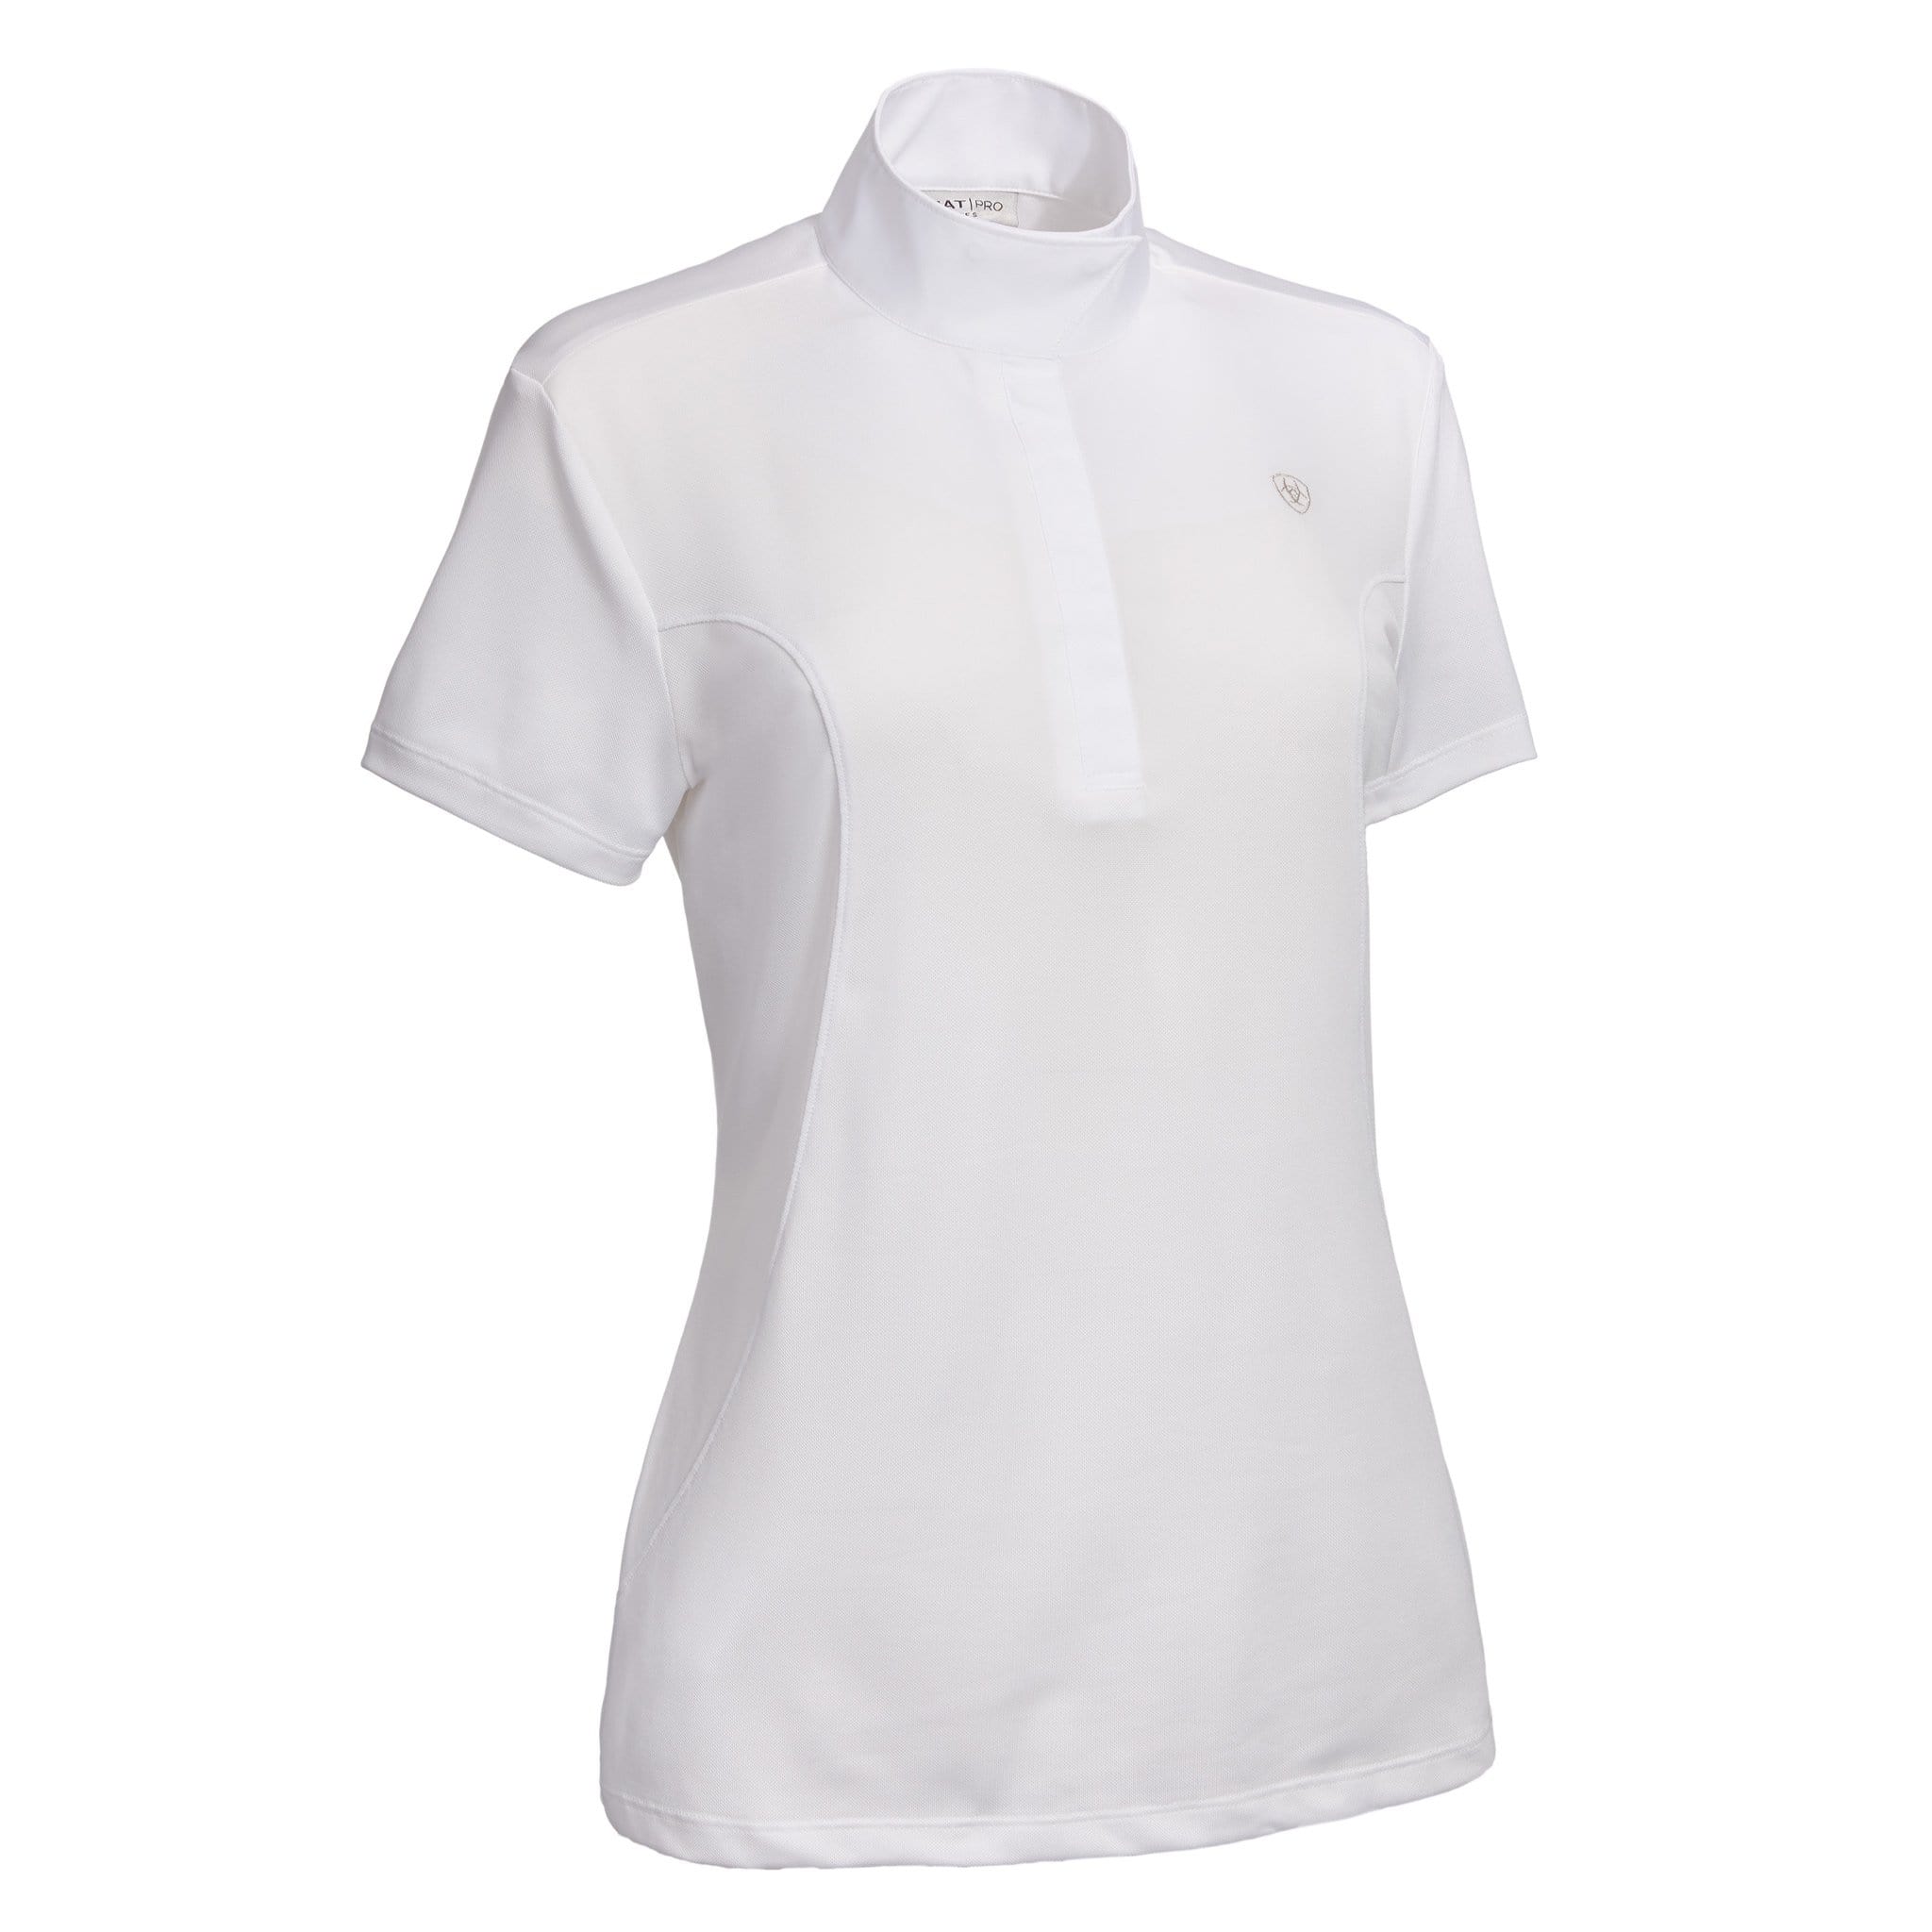 Women's Ariat Aptos Show Shirt White 10008992 